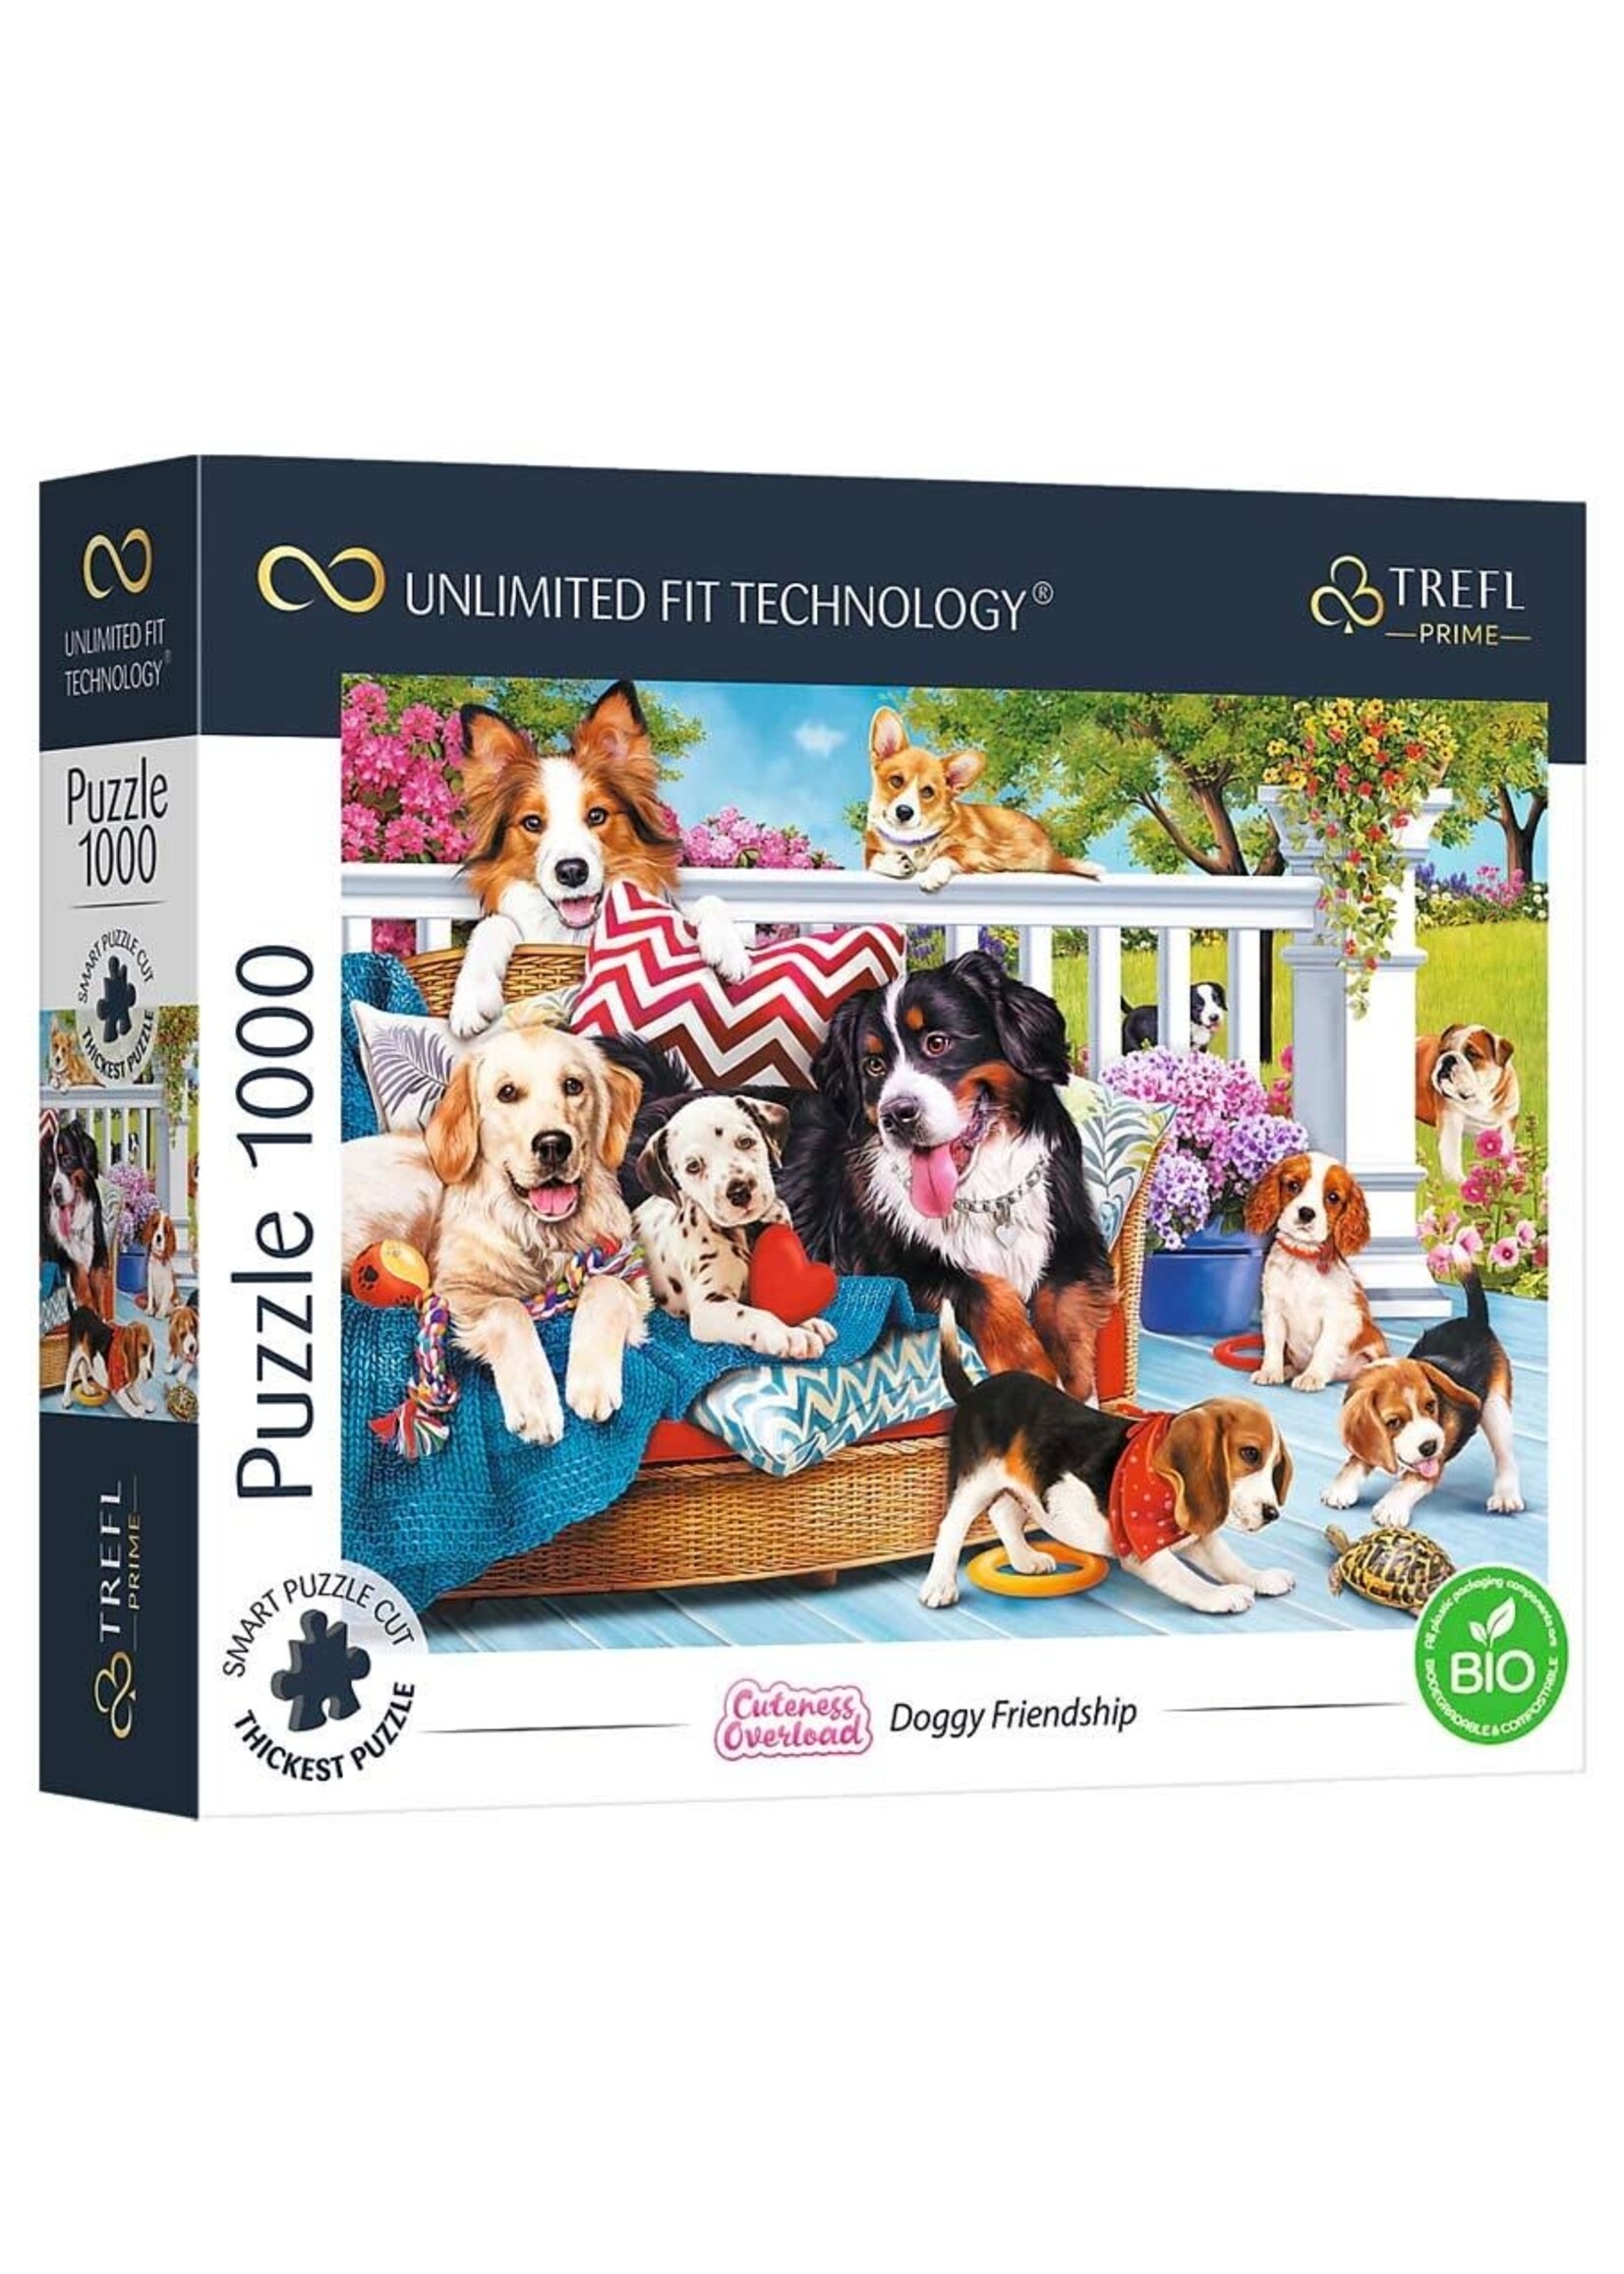 Trefl Unlimited Fit Puzzle: Cuteness Doggy Love 1000pc